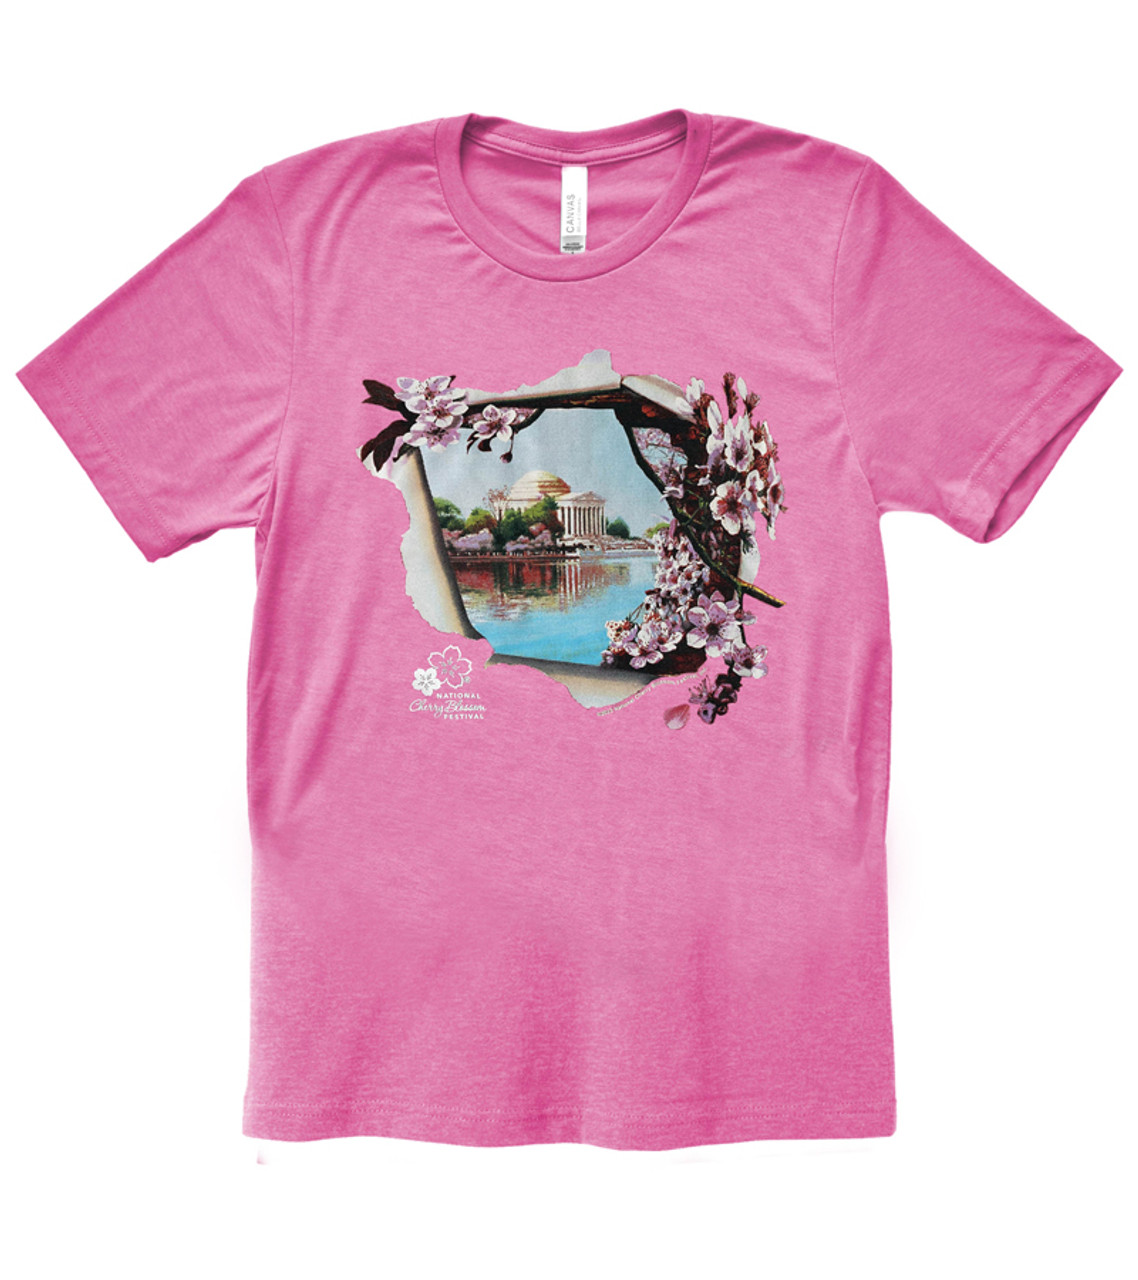 Washington Nationals cherry blossom shirt - Aquafinashirt